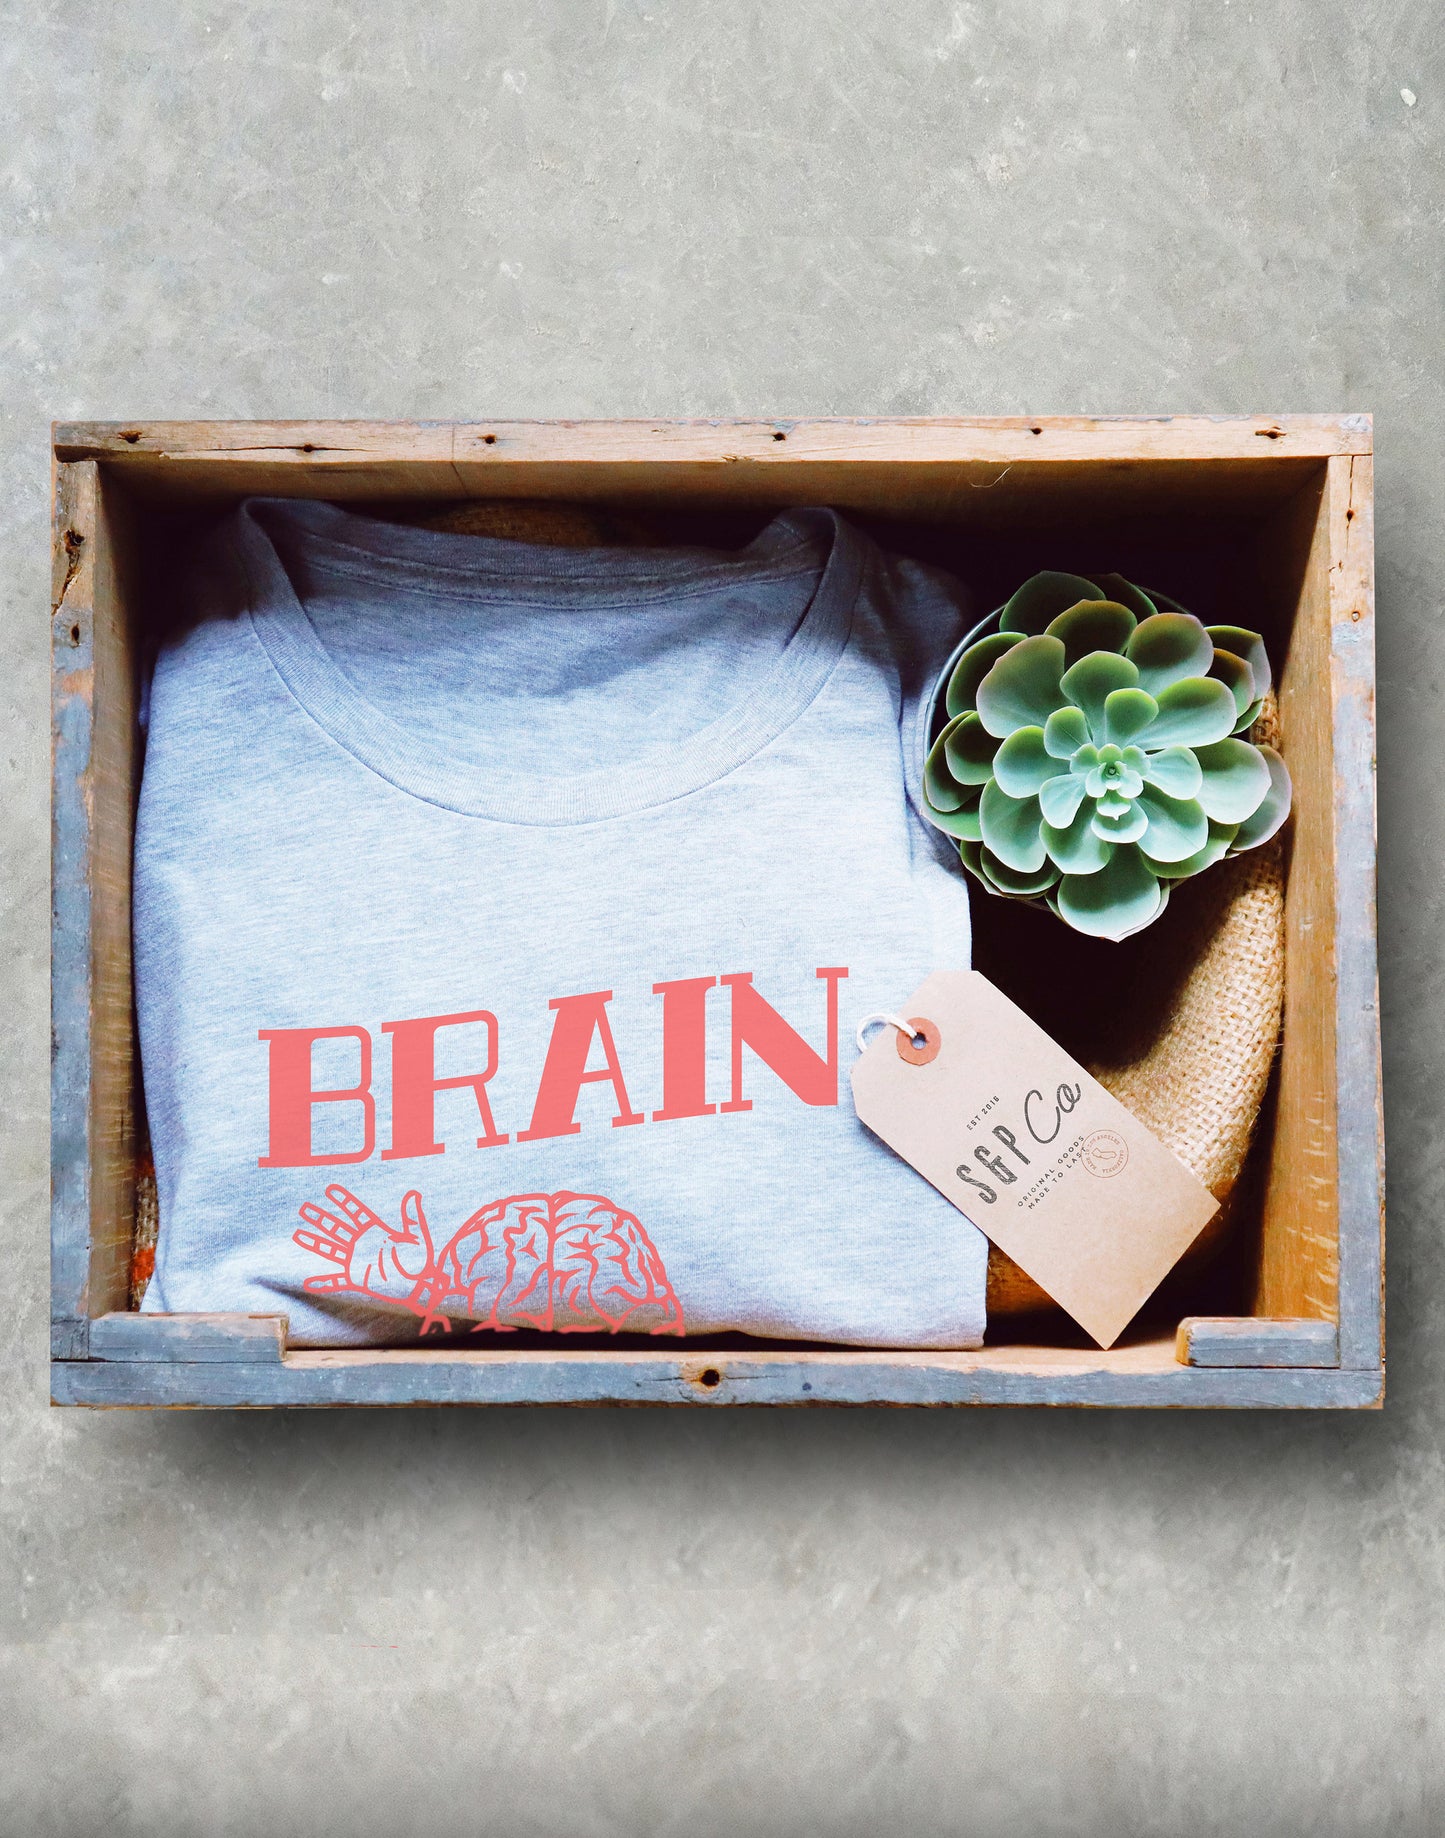 Brain Waves Unisex Shirt - Science shirt, Science gift, Funny science shirt, Surgeon shirt, Science teacher gift, Surgeon gift, Geek shirt